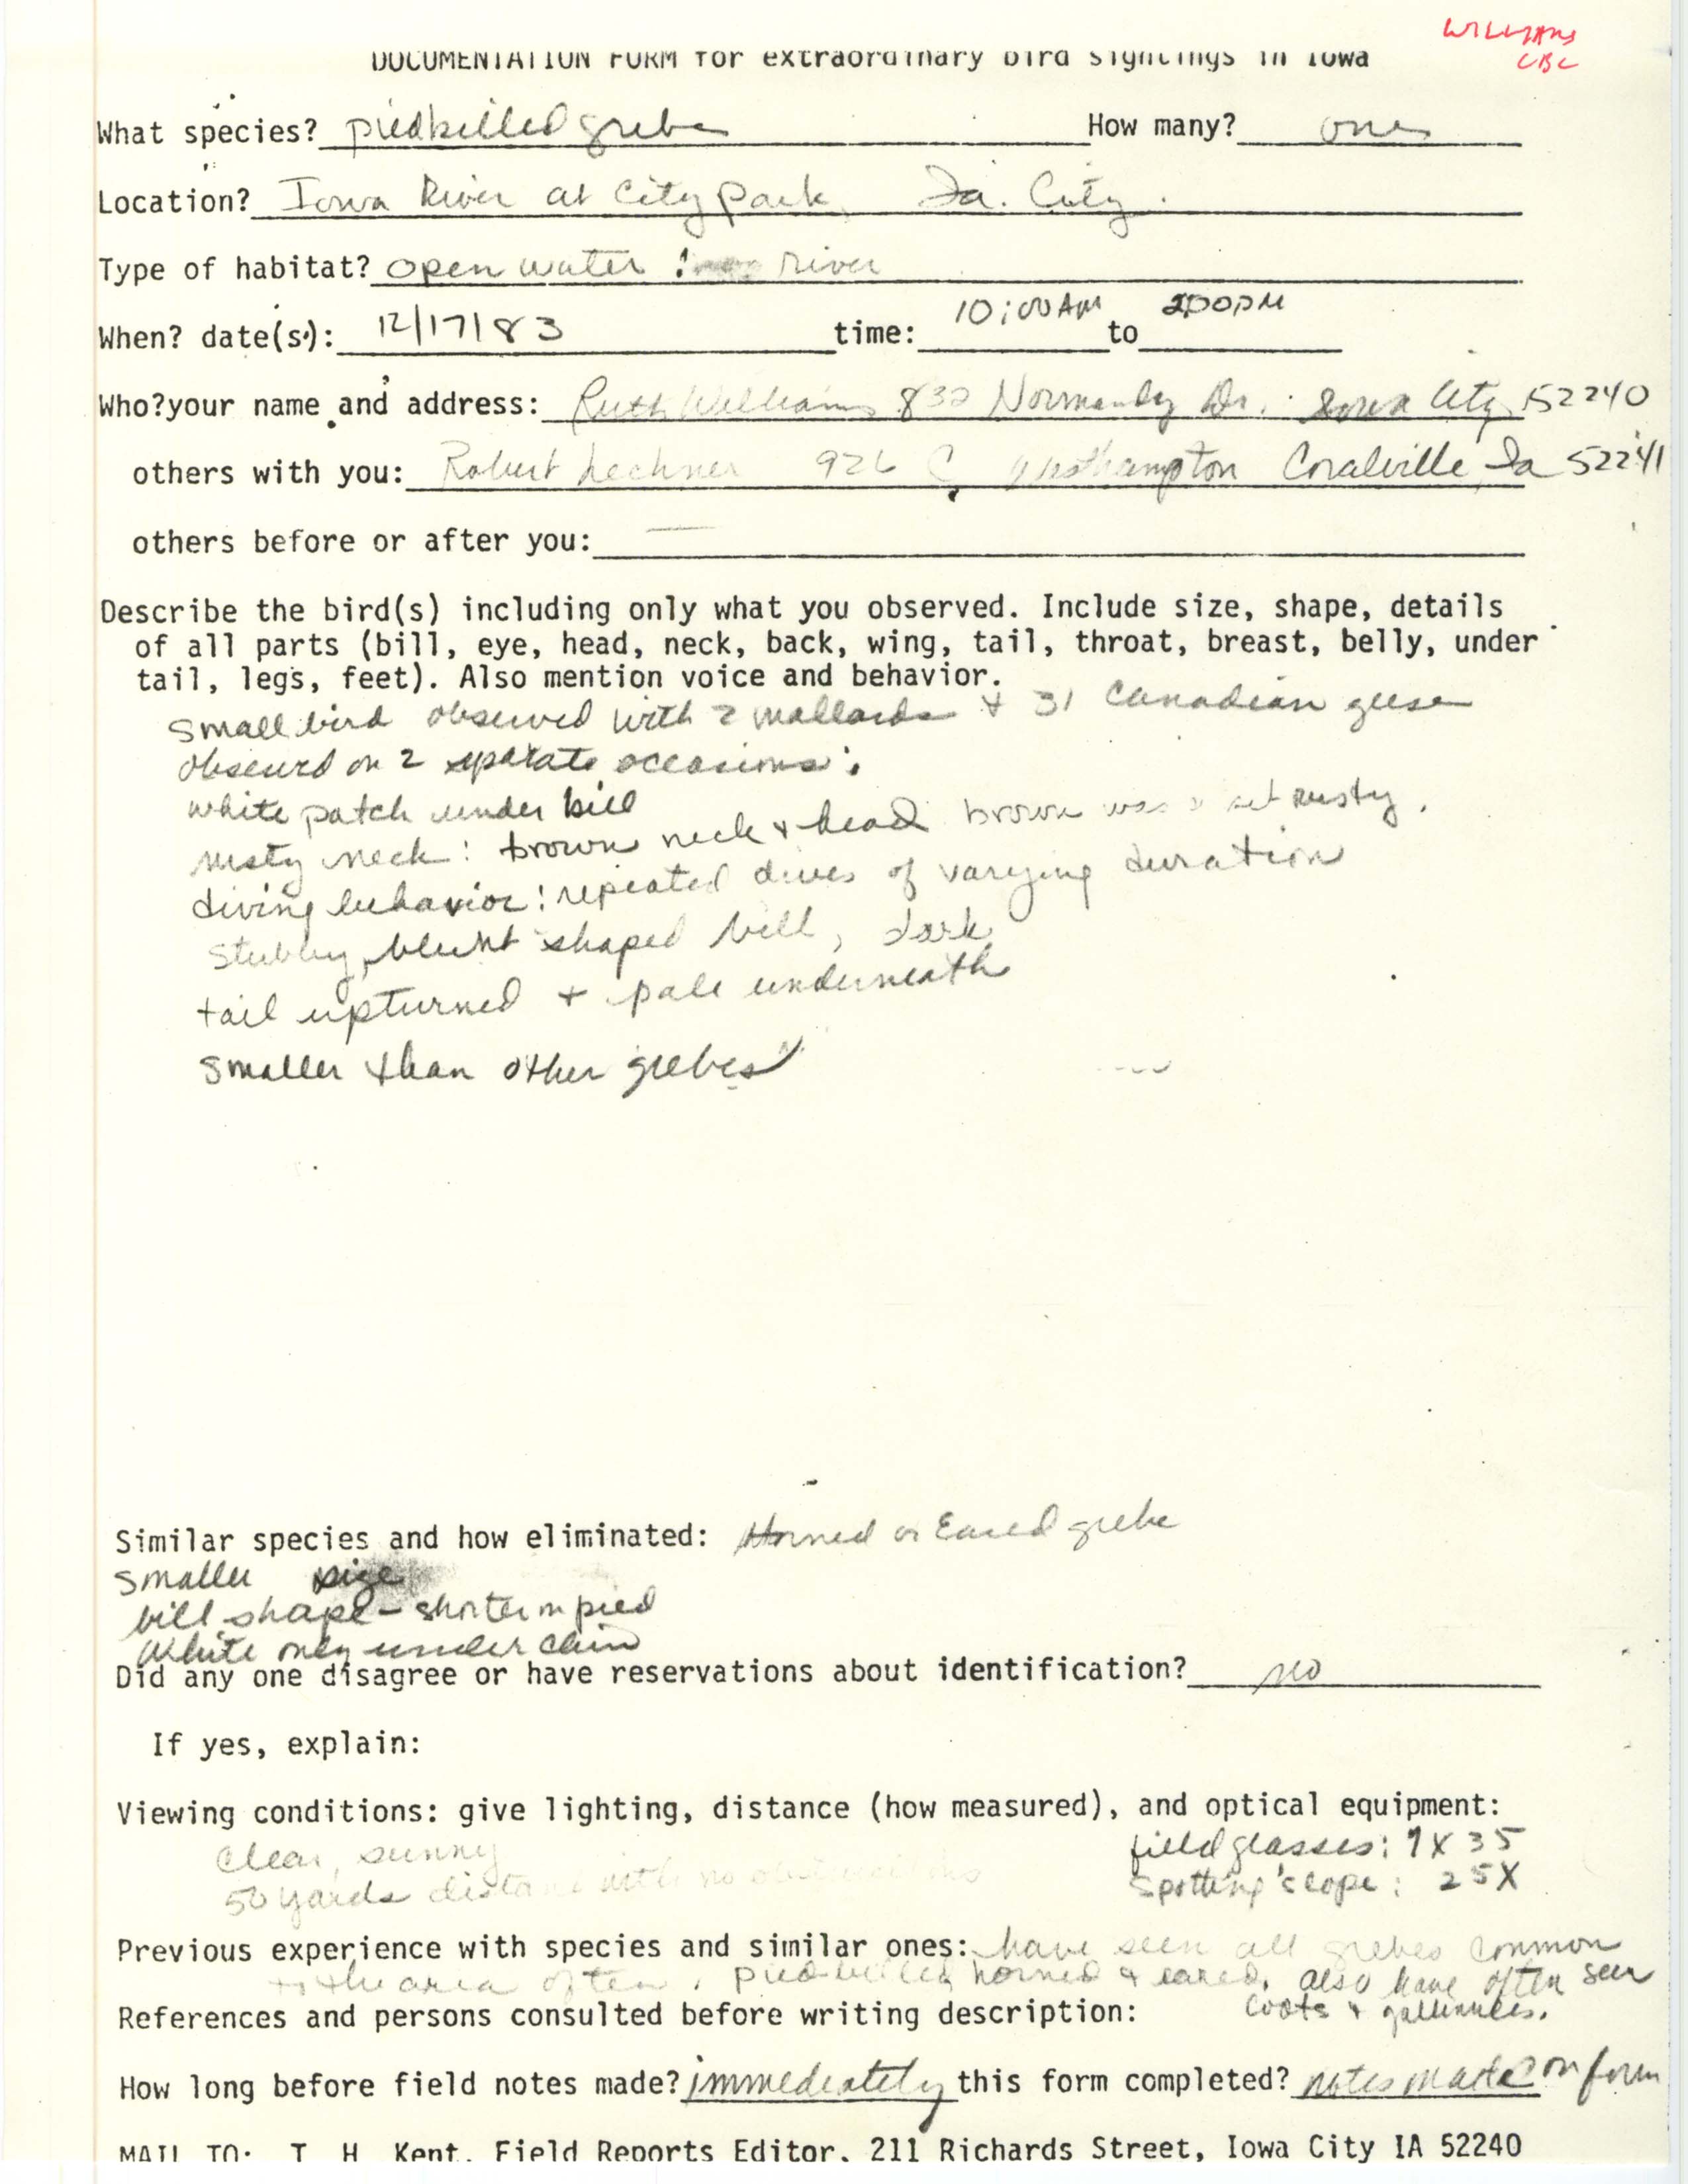 Rare bird documentation form for Pied-billed Grebe at City Park, 1983